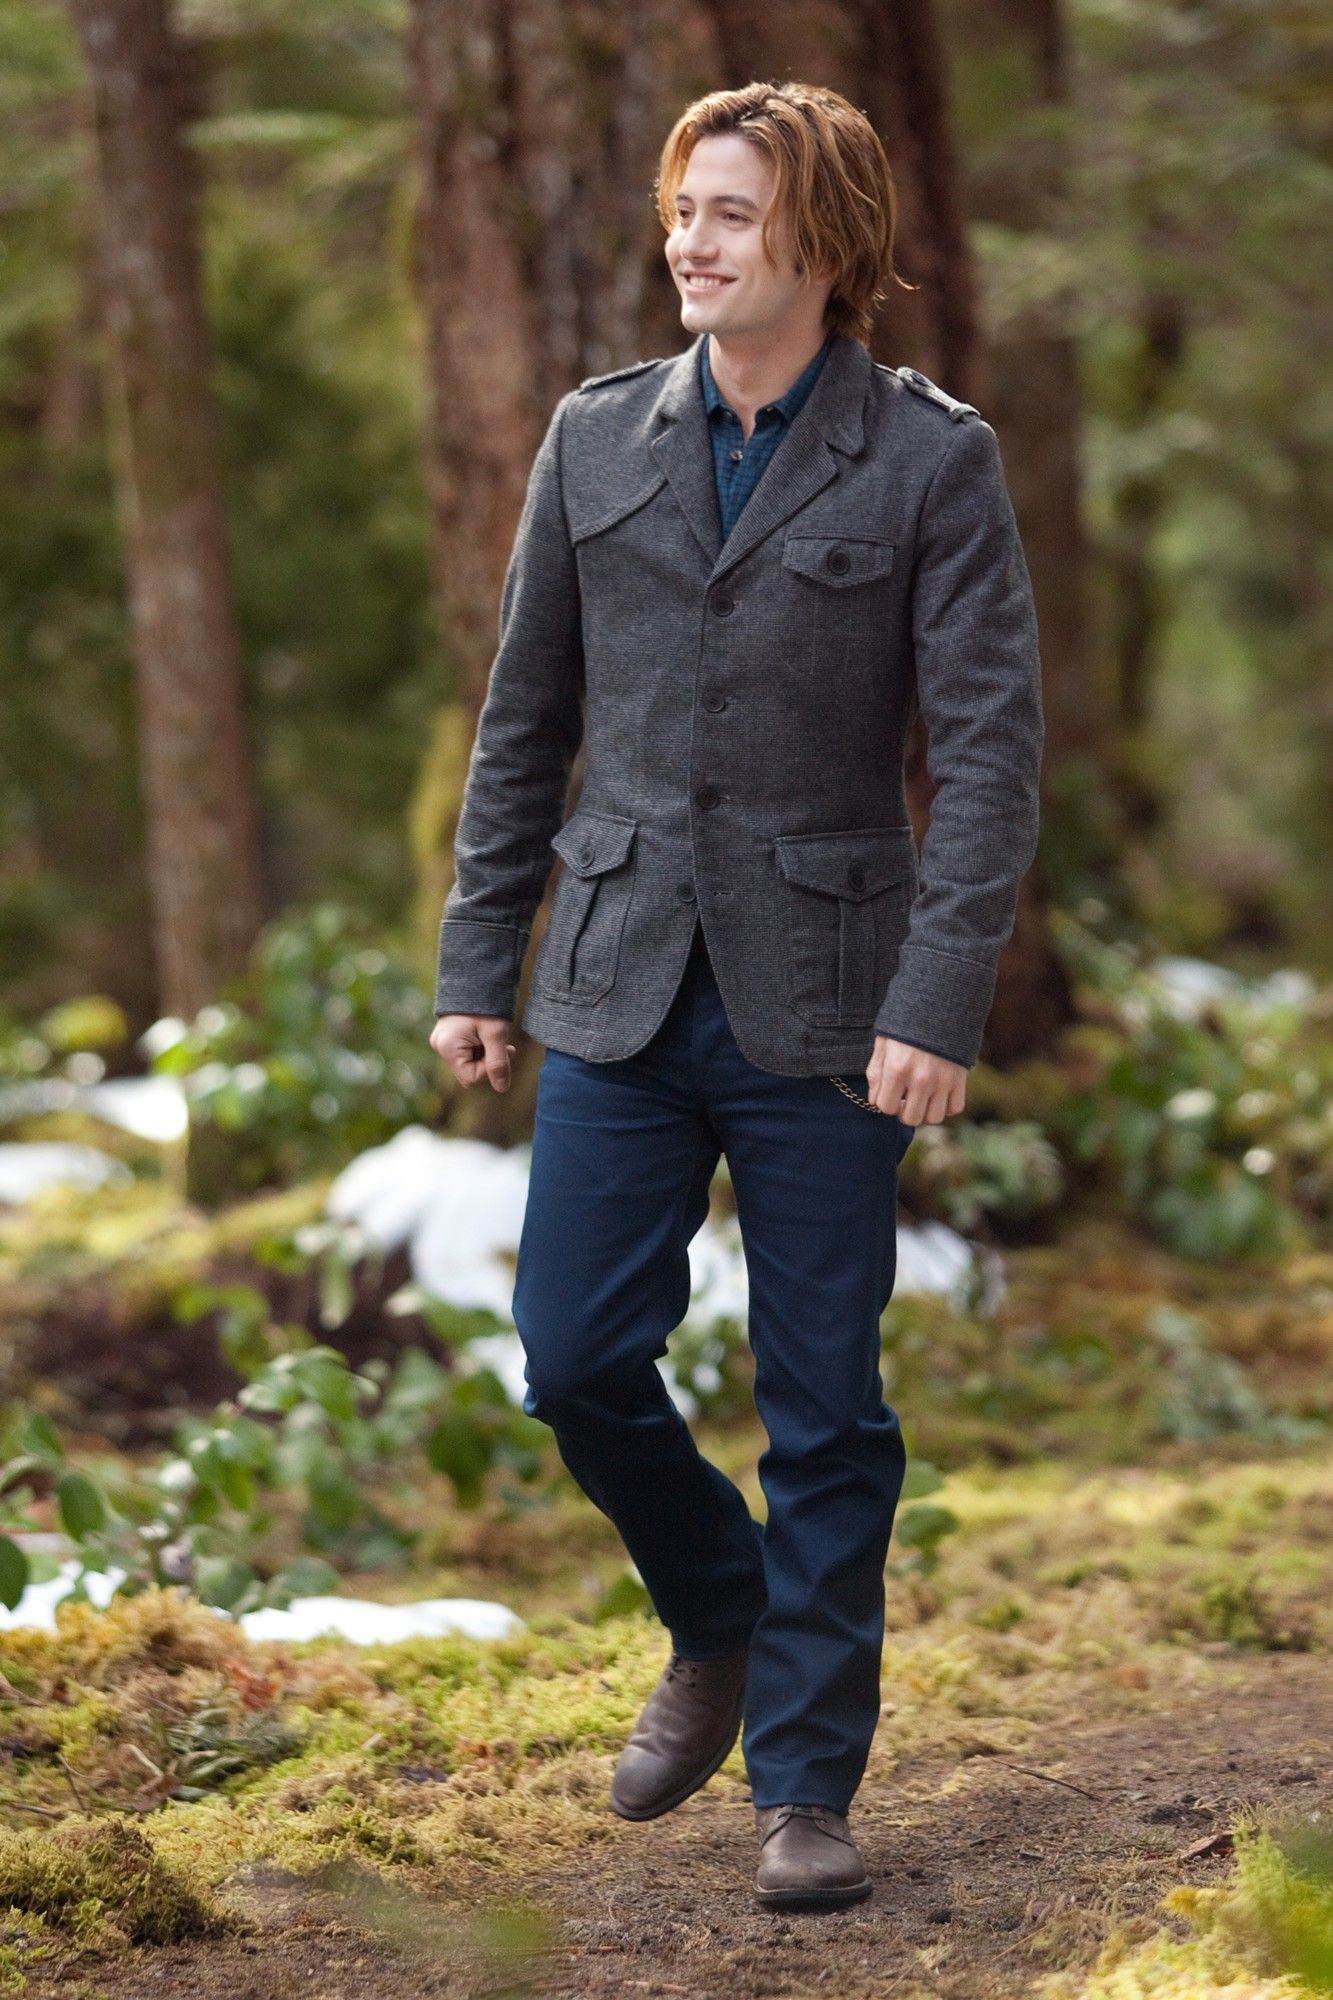 Jackson Rathbone stars as Jasper Hale in Summit Entertainment's The Twilight Saga's Breaking Dawn Part II (2012)